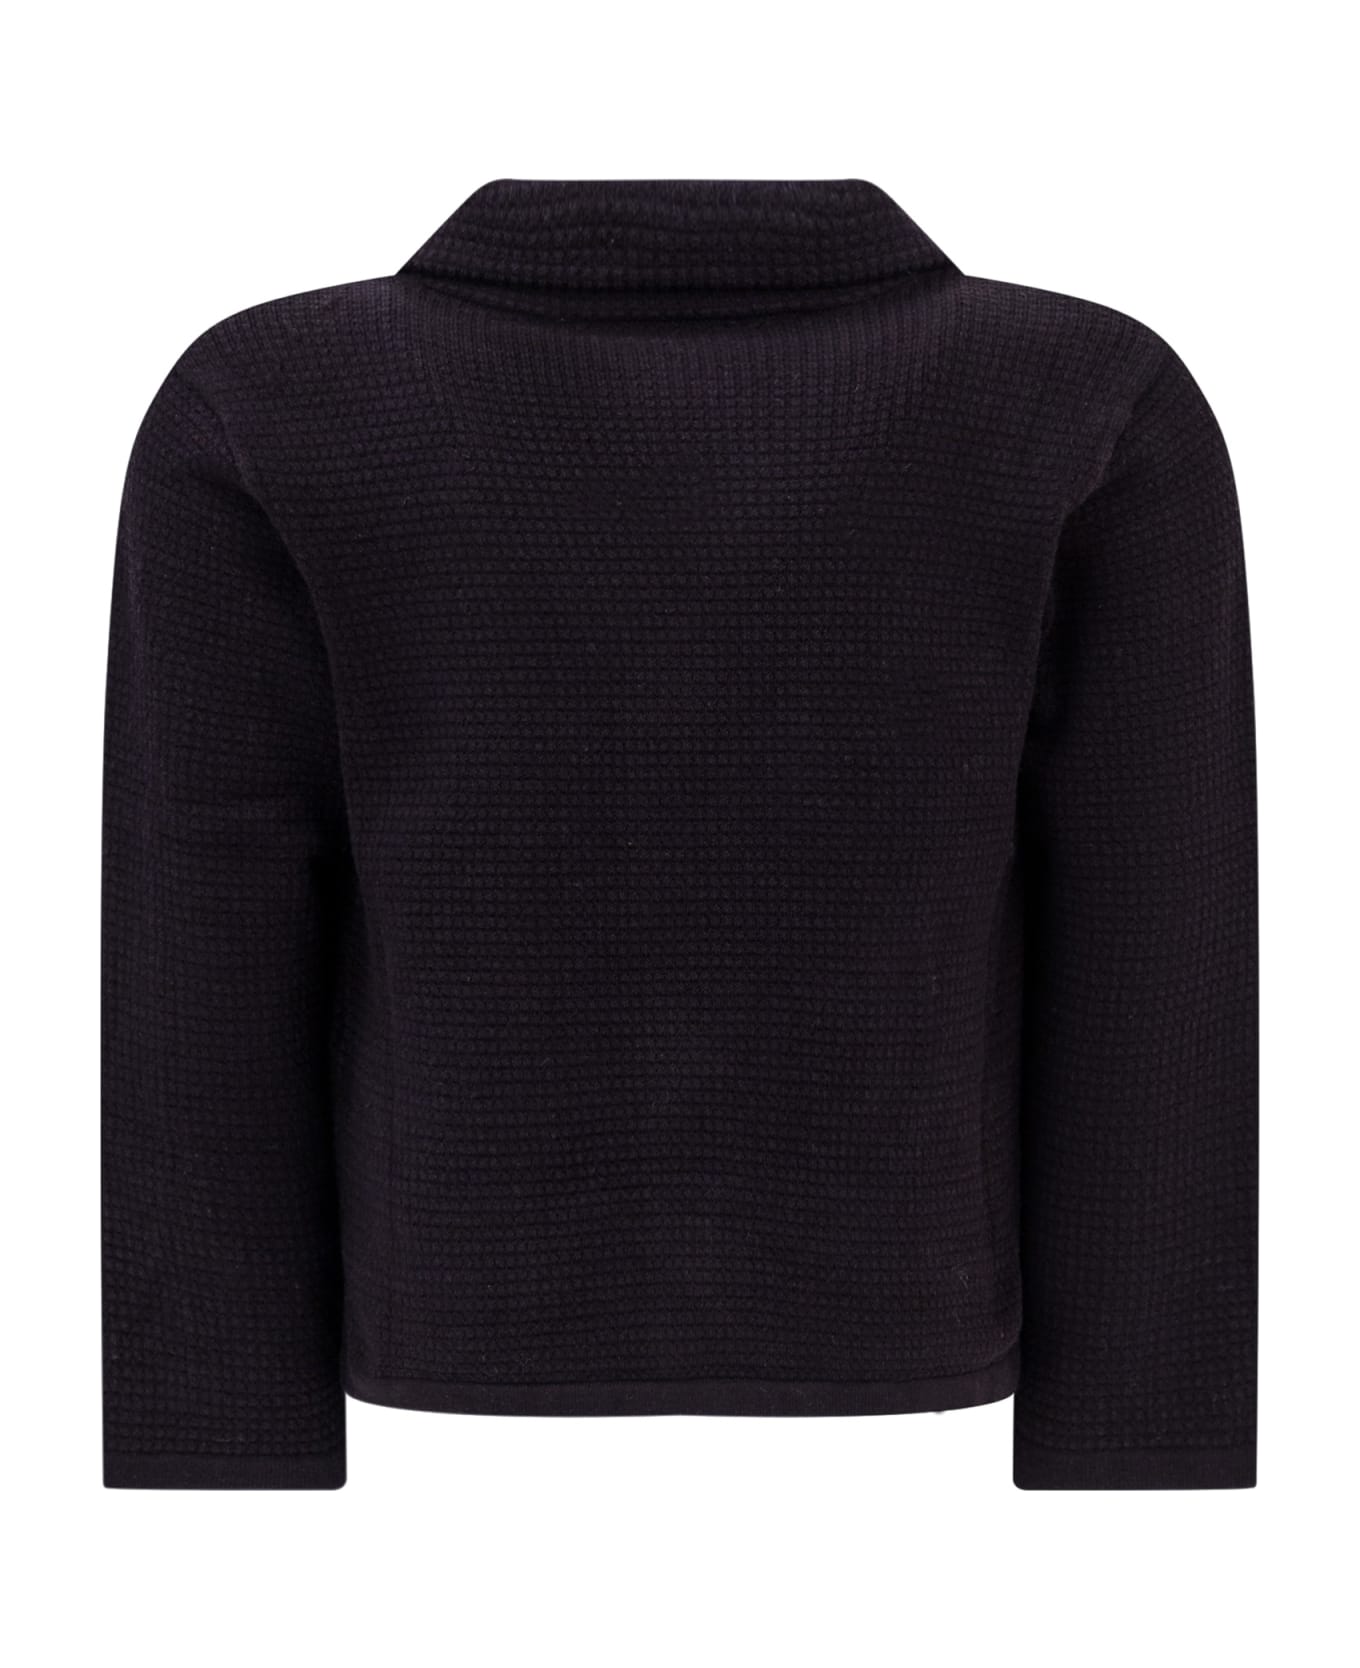 Emporio Armani Knitted Jacket - BLU NAVY コート＆ジャケット